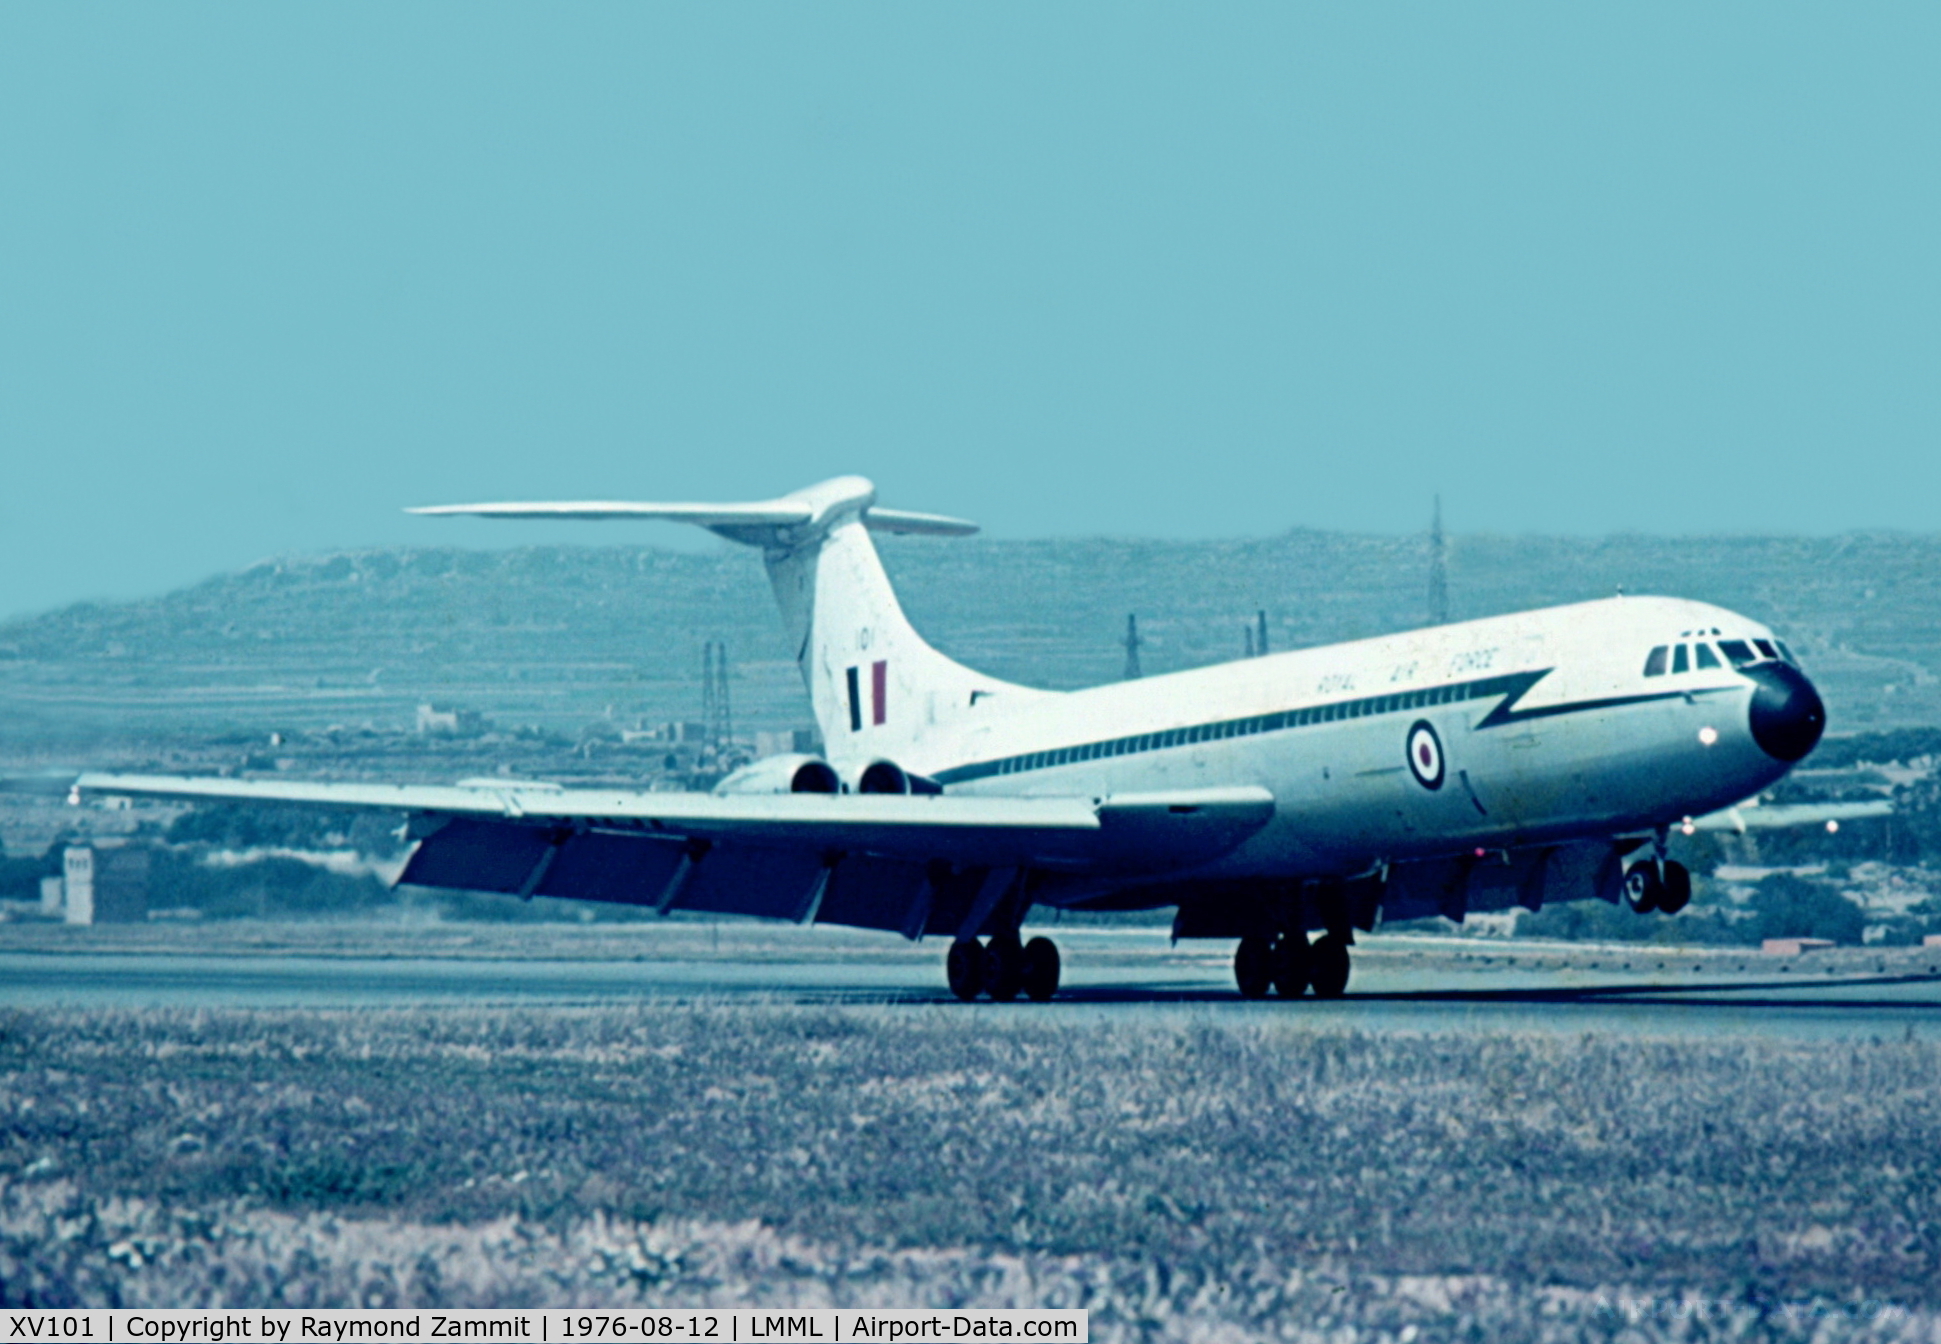 XV101, 1967 Vickers VC10 C.1K C/N 831, Vickers VC10 C.1 XV101 Royal Air Force